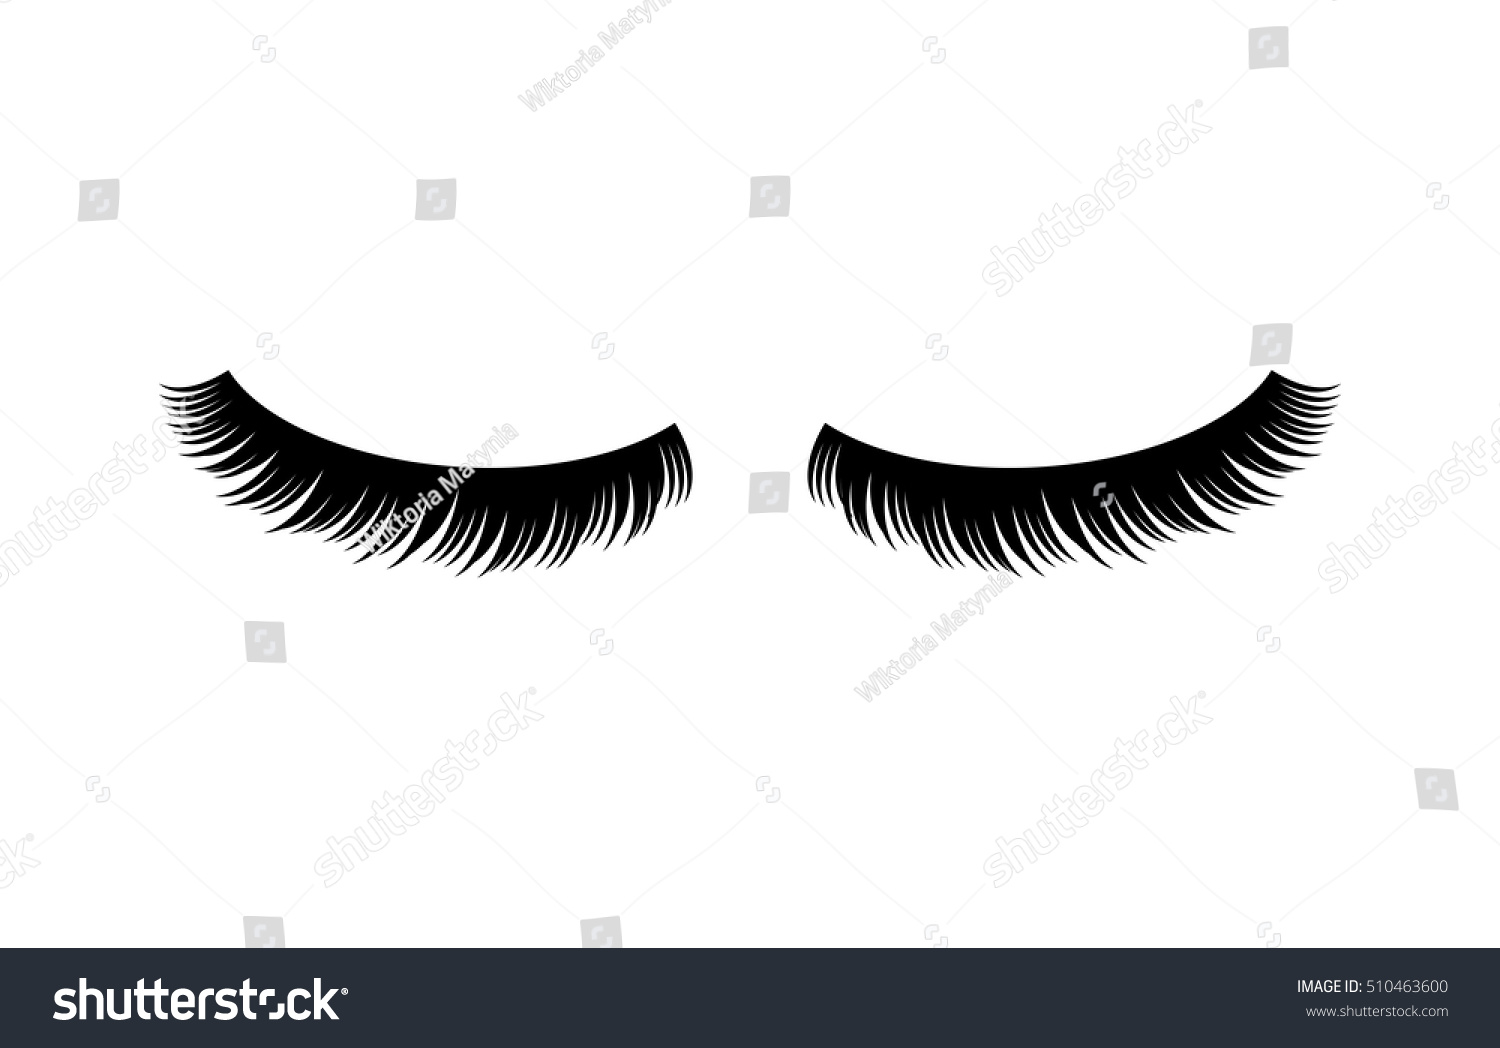 Eyelashes Vector Illustration Stock Vector 510463600 - Shutterstock